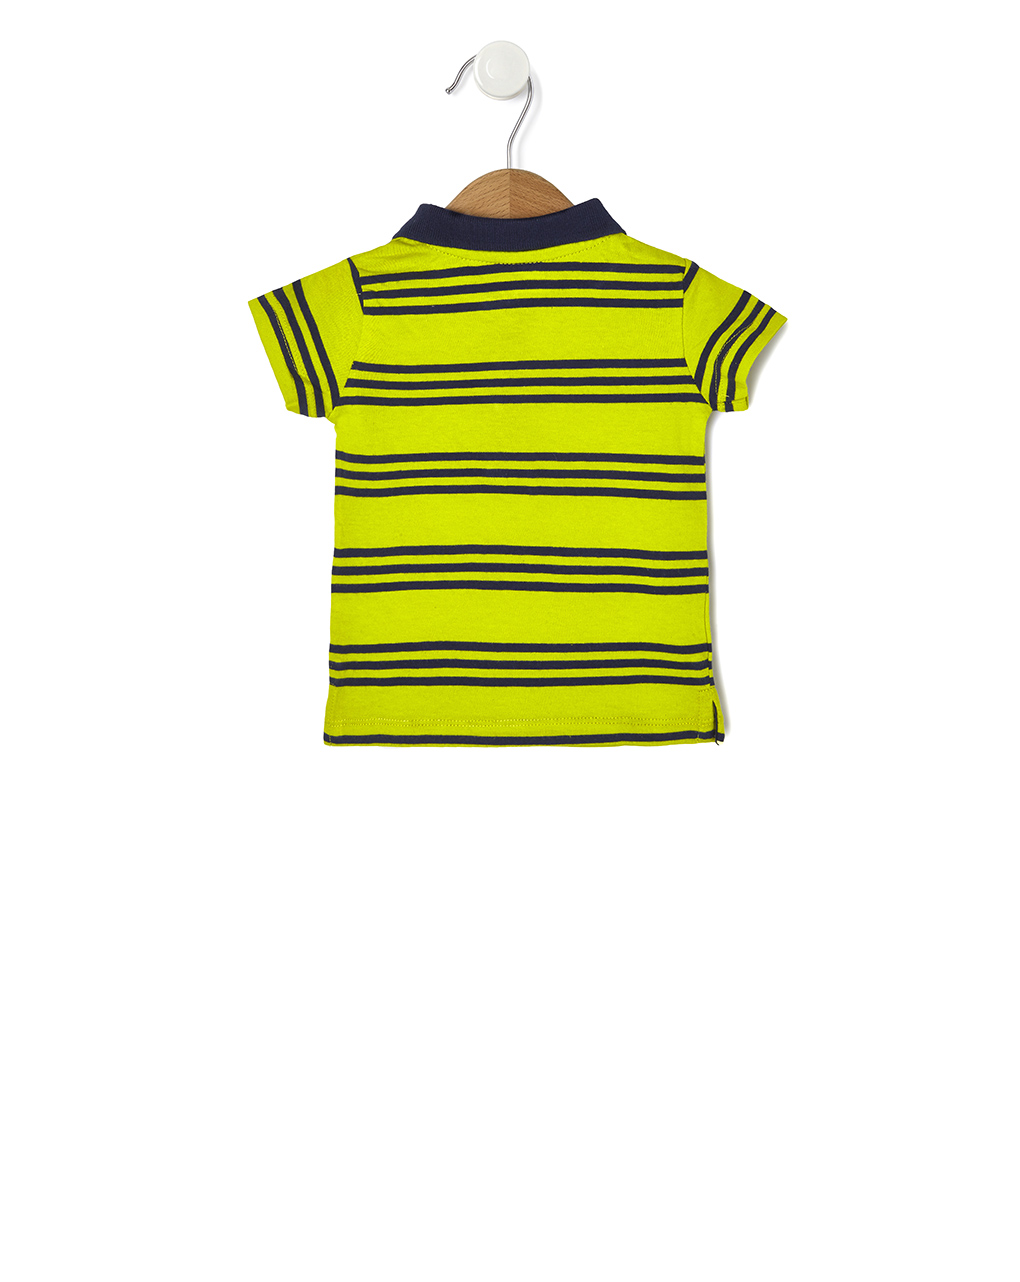 T-shirt jersey πόλο ριγέ πράσινο - μπλε για αγόρι - Prénatal